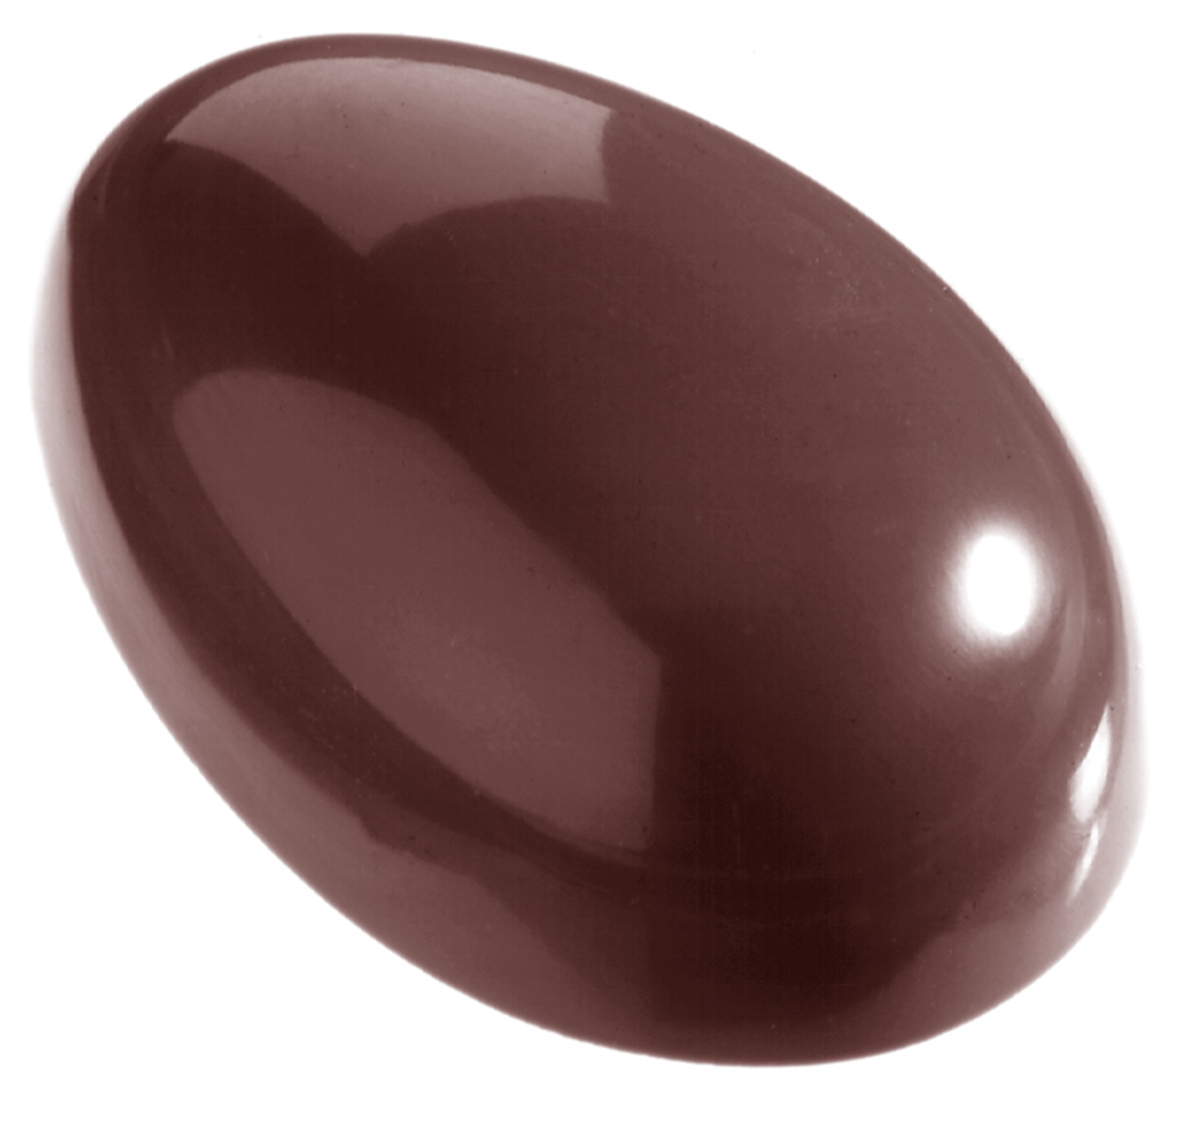 Professionel chokoladeform i polycarbonat - Egg smooth 4,3 cm CW1317